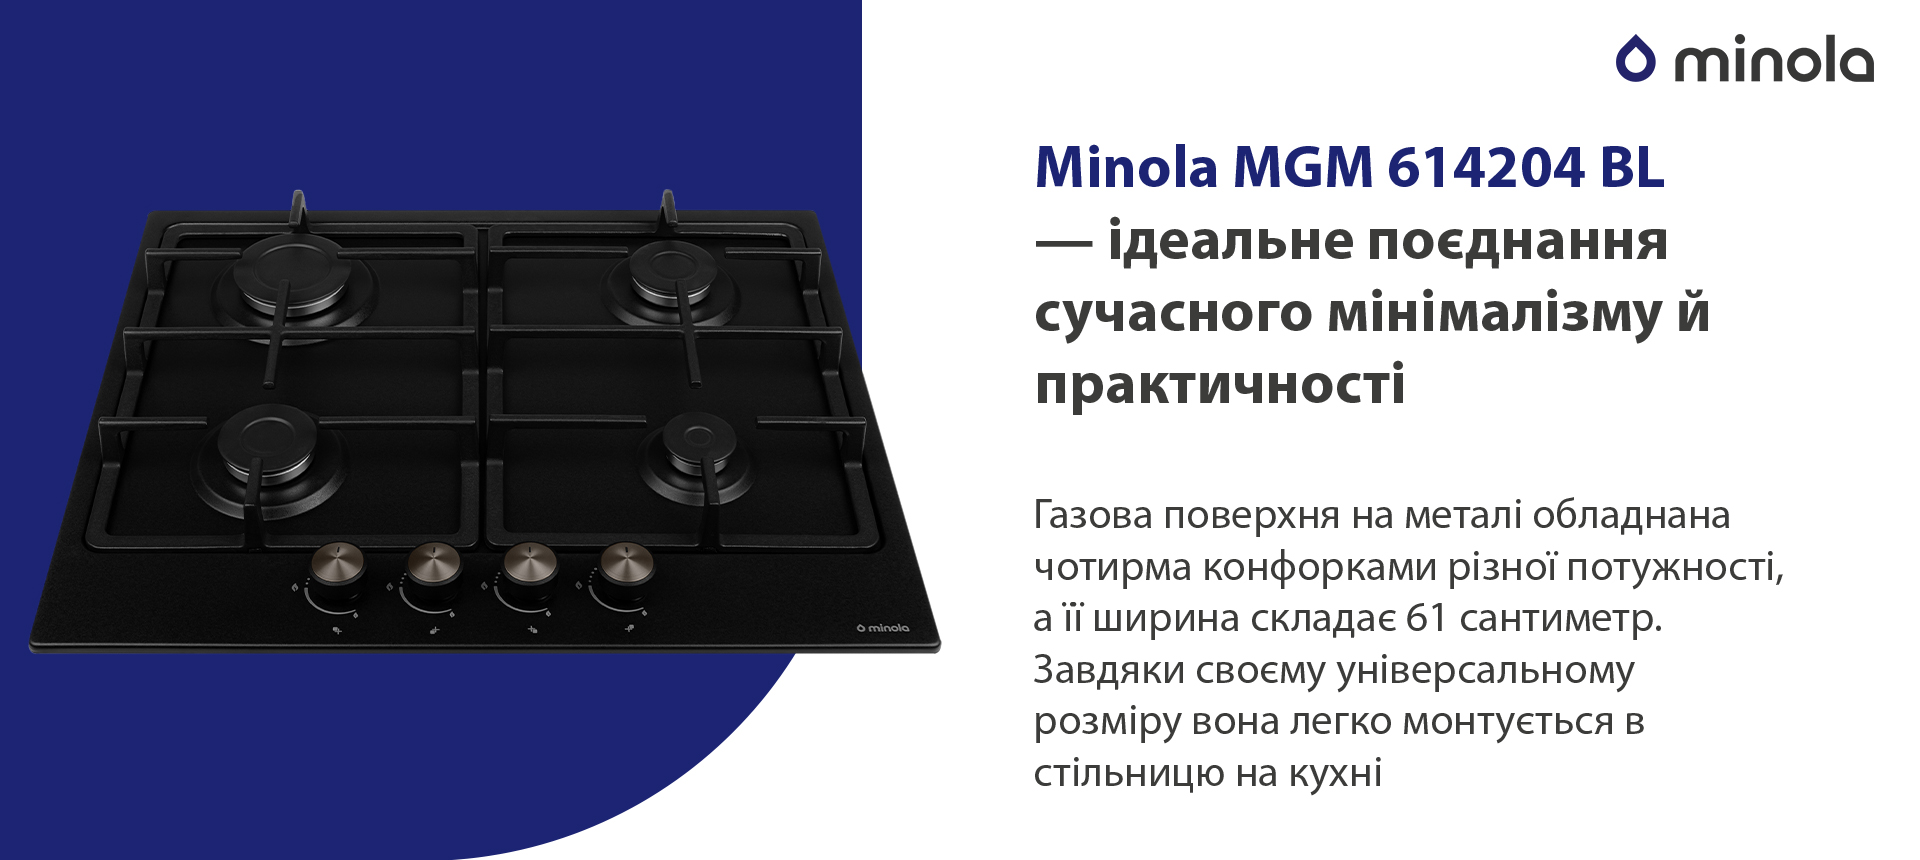 Minola MGM 614204 BL в магазине в Киеве - фото 10